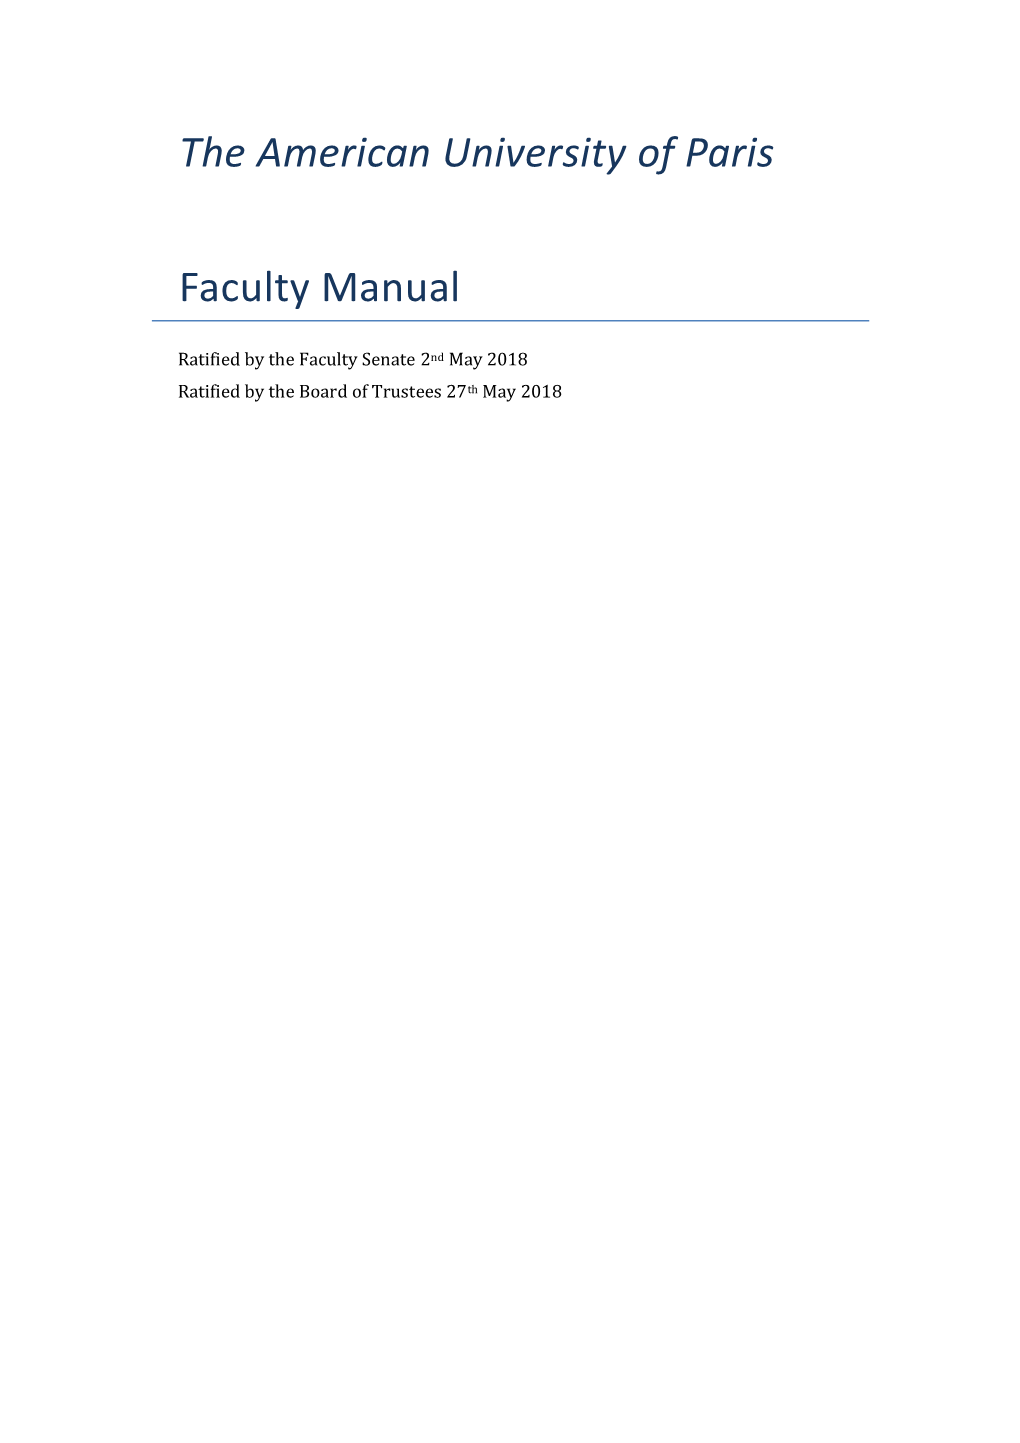 The American University of Paris Faculty Manual 27 May 2018